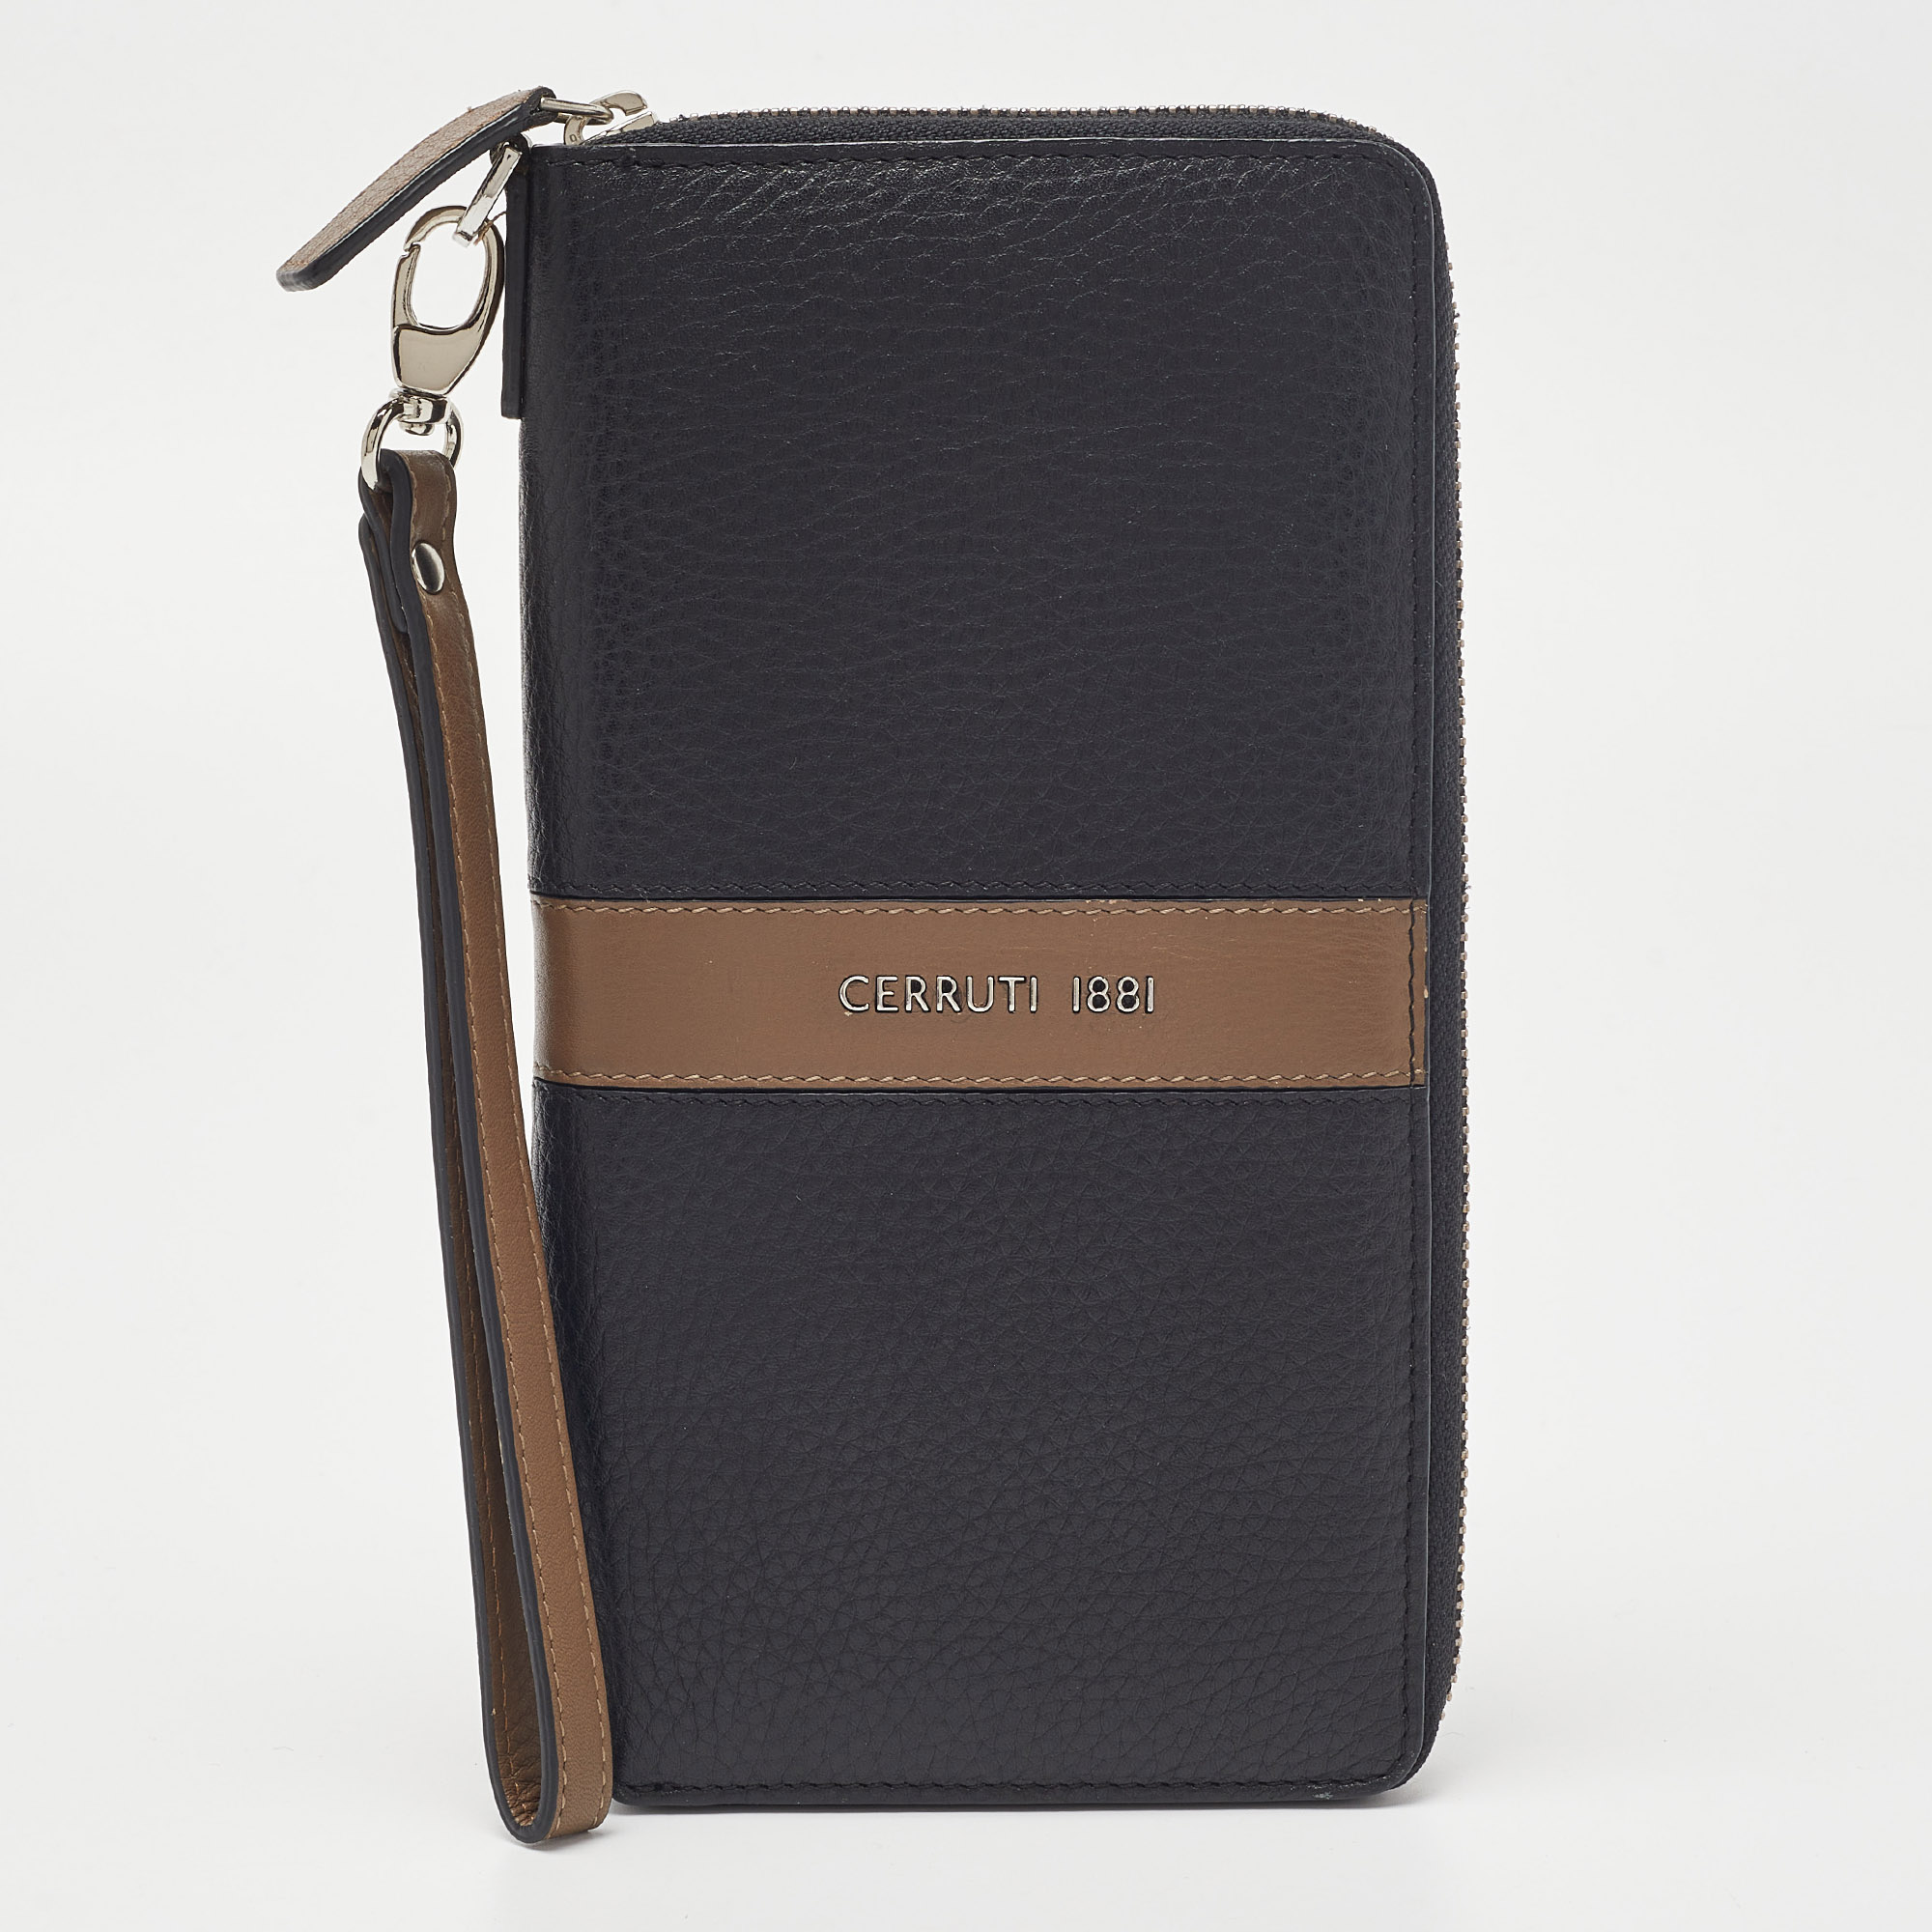 cerruti 1881 black/tan leather cerrutic zip around wristlet wallet